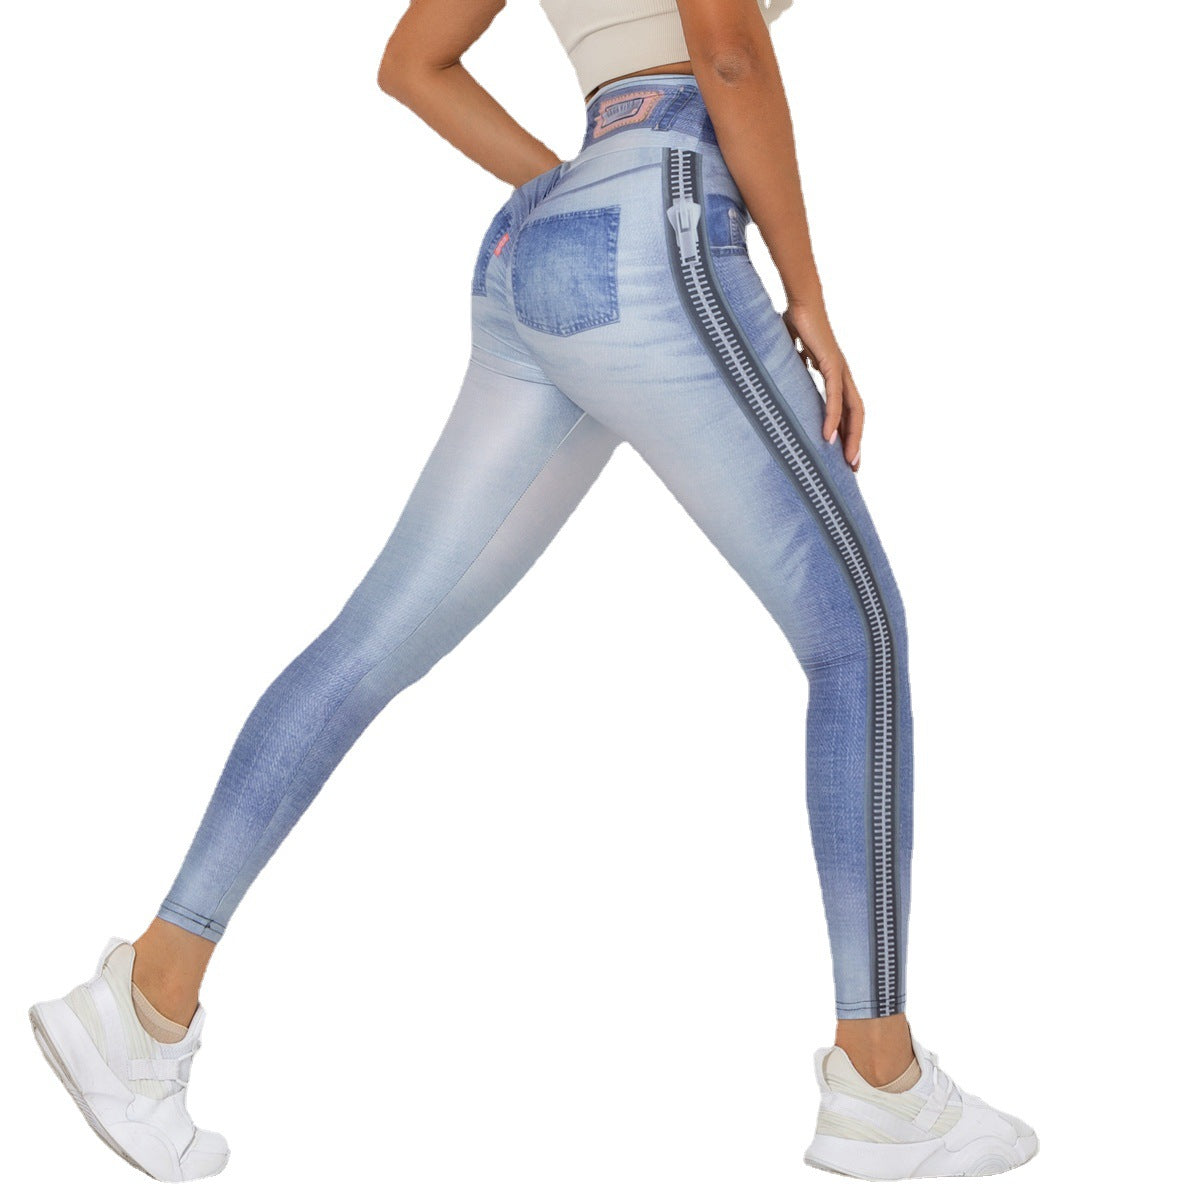 New Digital Printing Denim Blue Tight High Elastic Quick-Drying Yoga Pants Sports Running Fitness Pants for Women